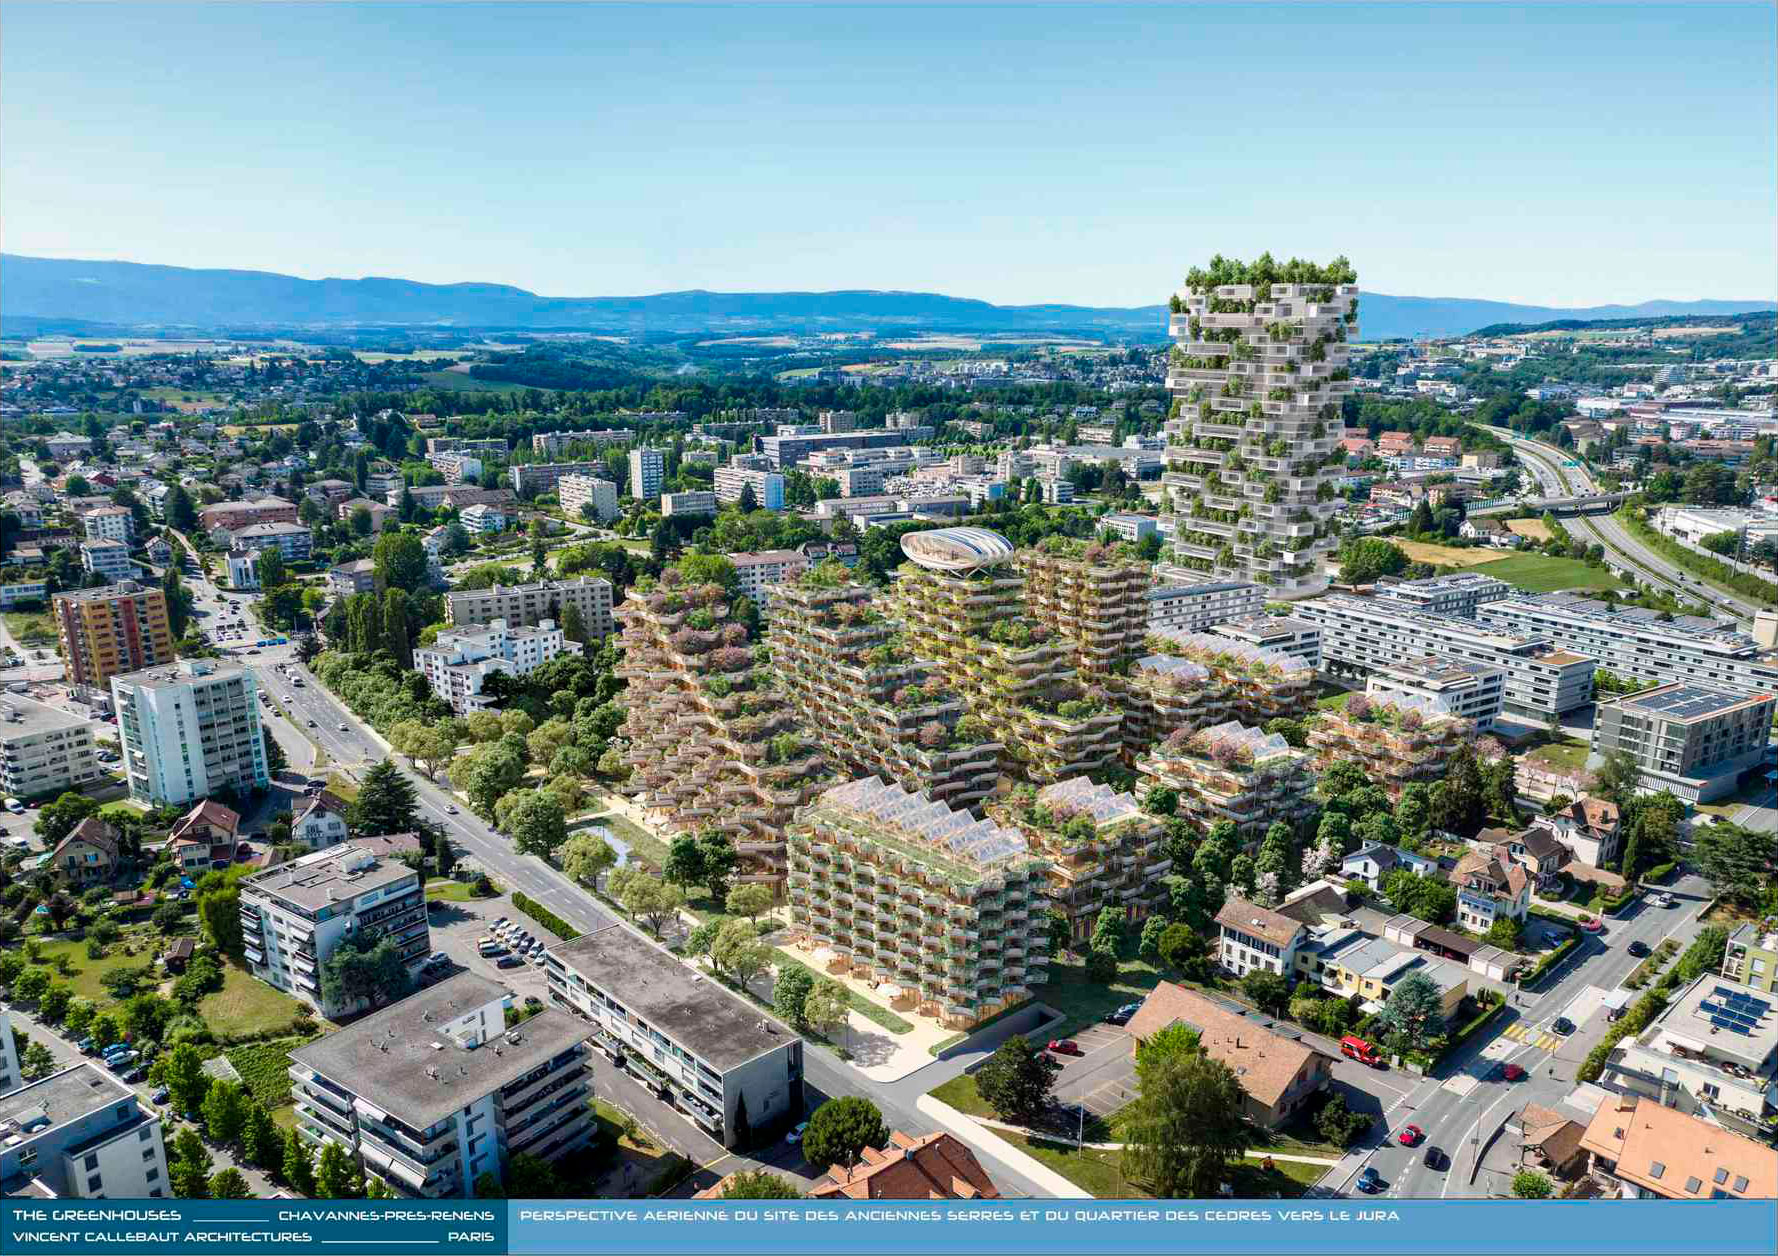 The Greenhouses или архитектура будущего, Лозанна, Швейцария (+ВИДЕО)